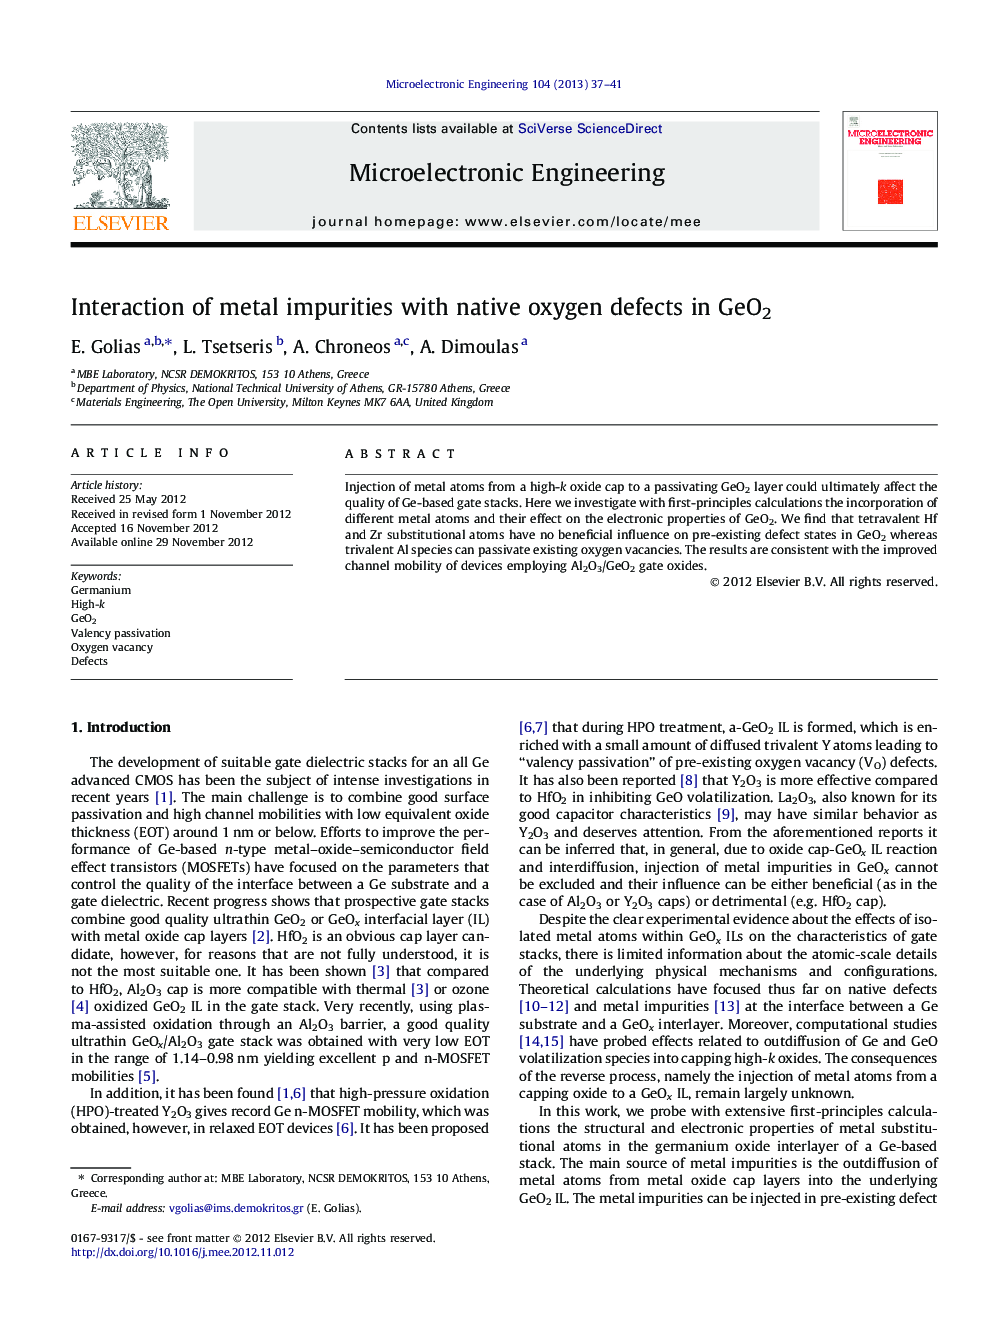 Interaction of metal impurities with native oxygen defects in GeO2